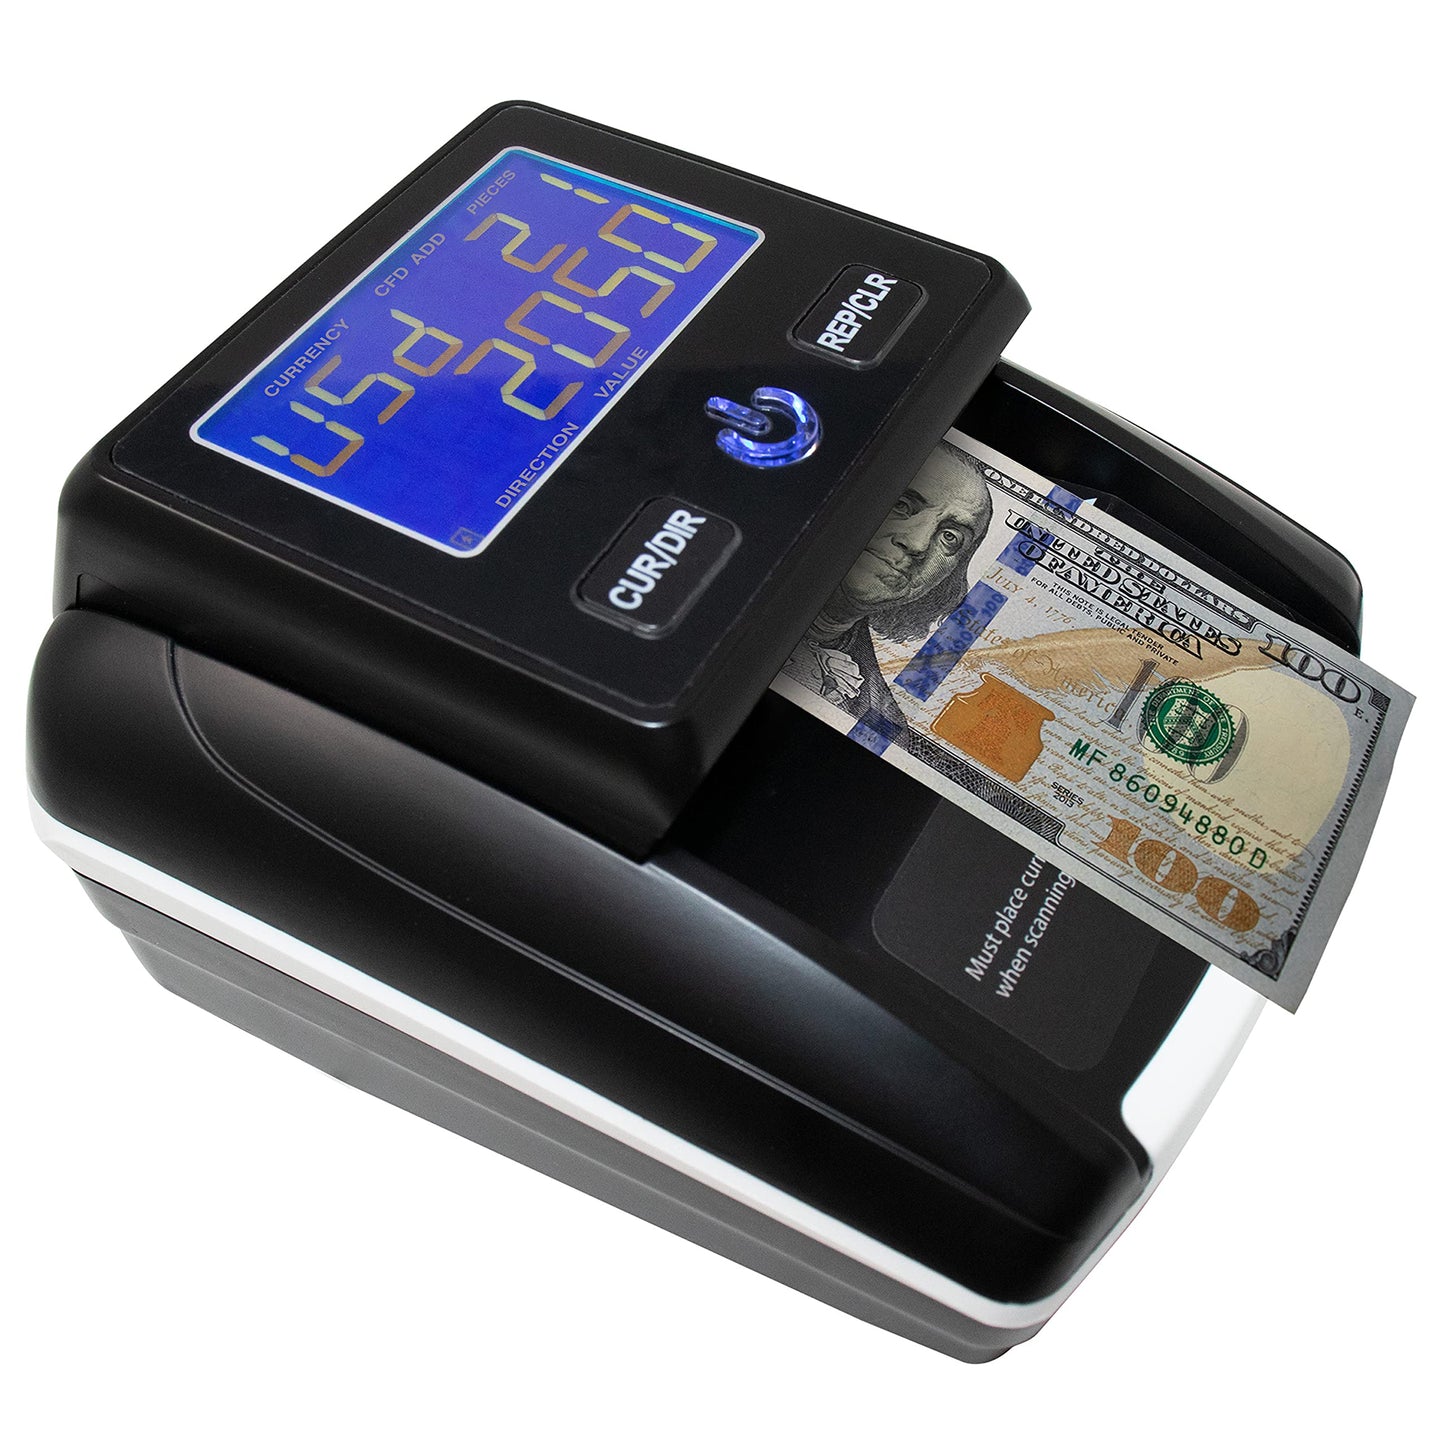 V45 Pass Thru Counterfeit Detector